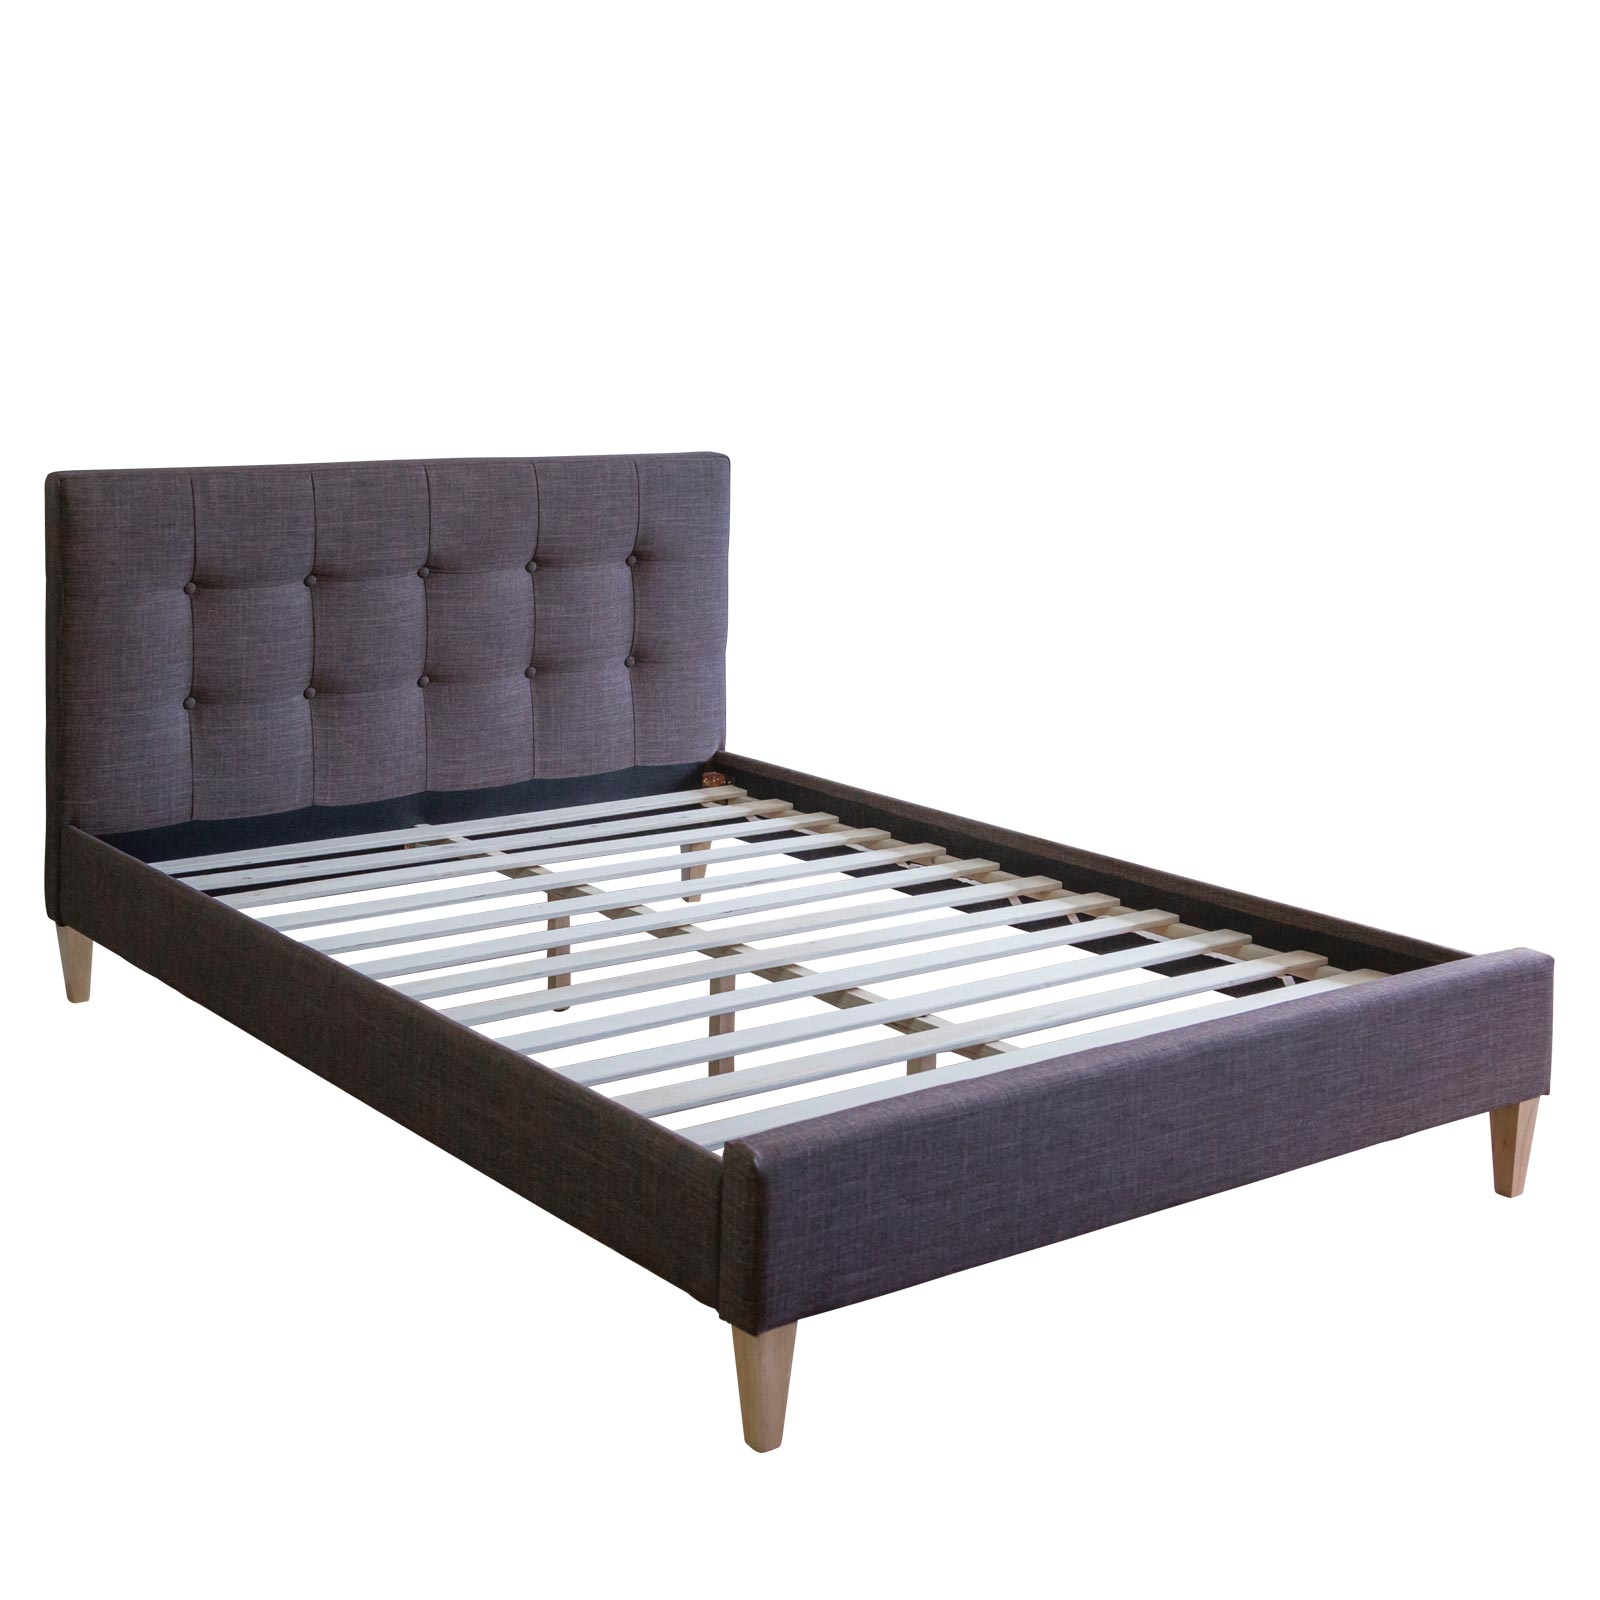 Upholstered Bed Bedside Table Slatted Frame Double Bed 140 160 180 x200 cm Bed Side Table Black Grey Brown